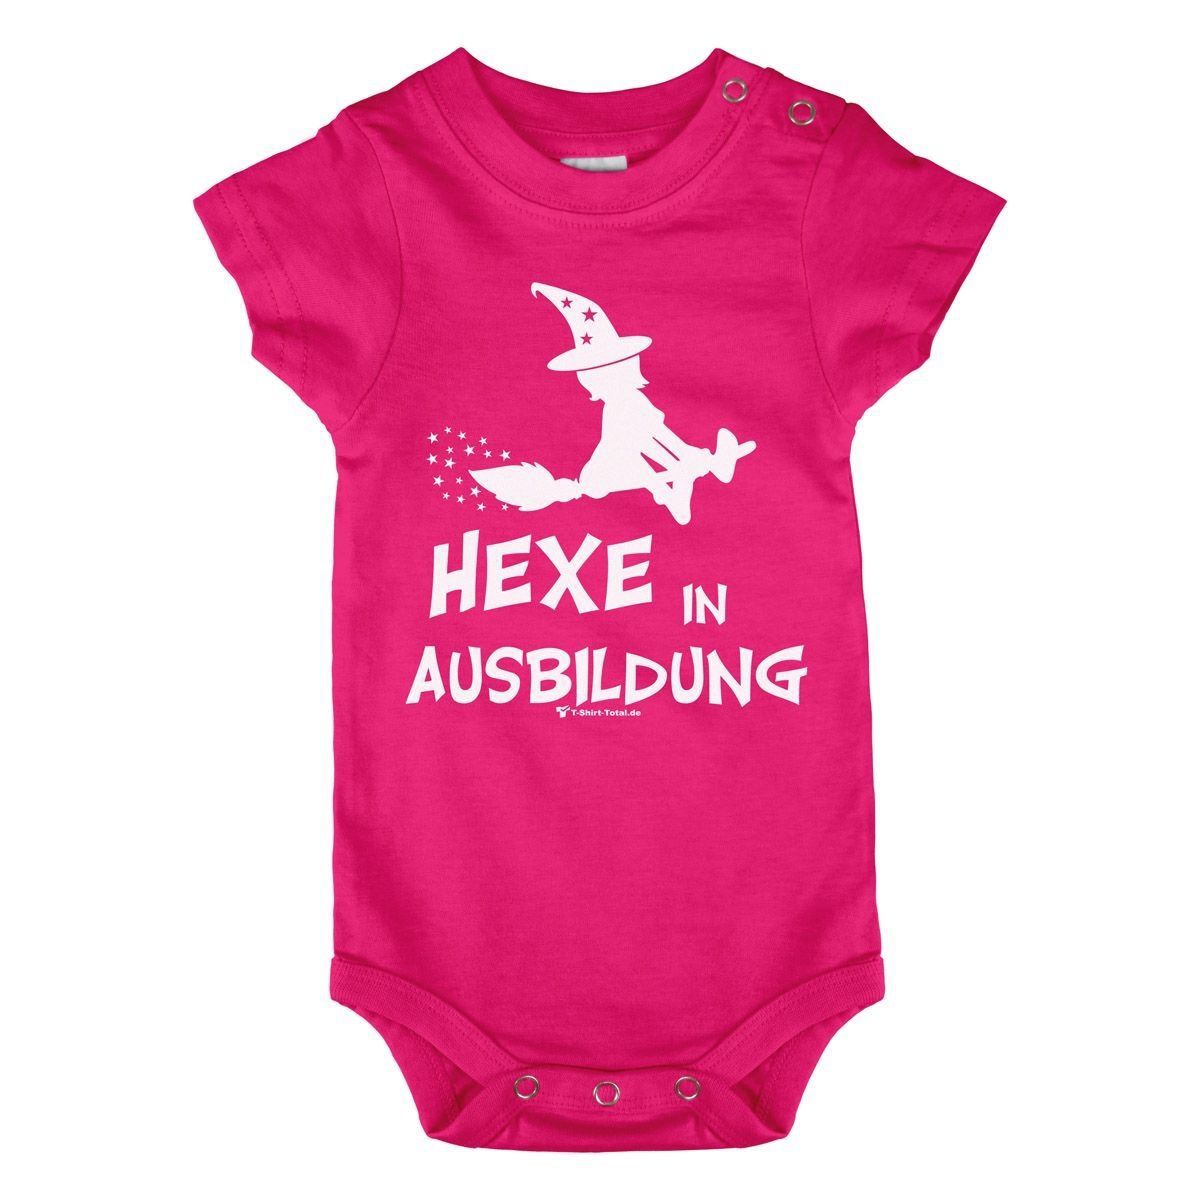 Hexe in Ausbildung Baby Body Kurzarm pink 68 / 74